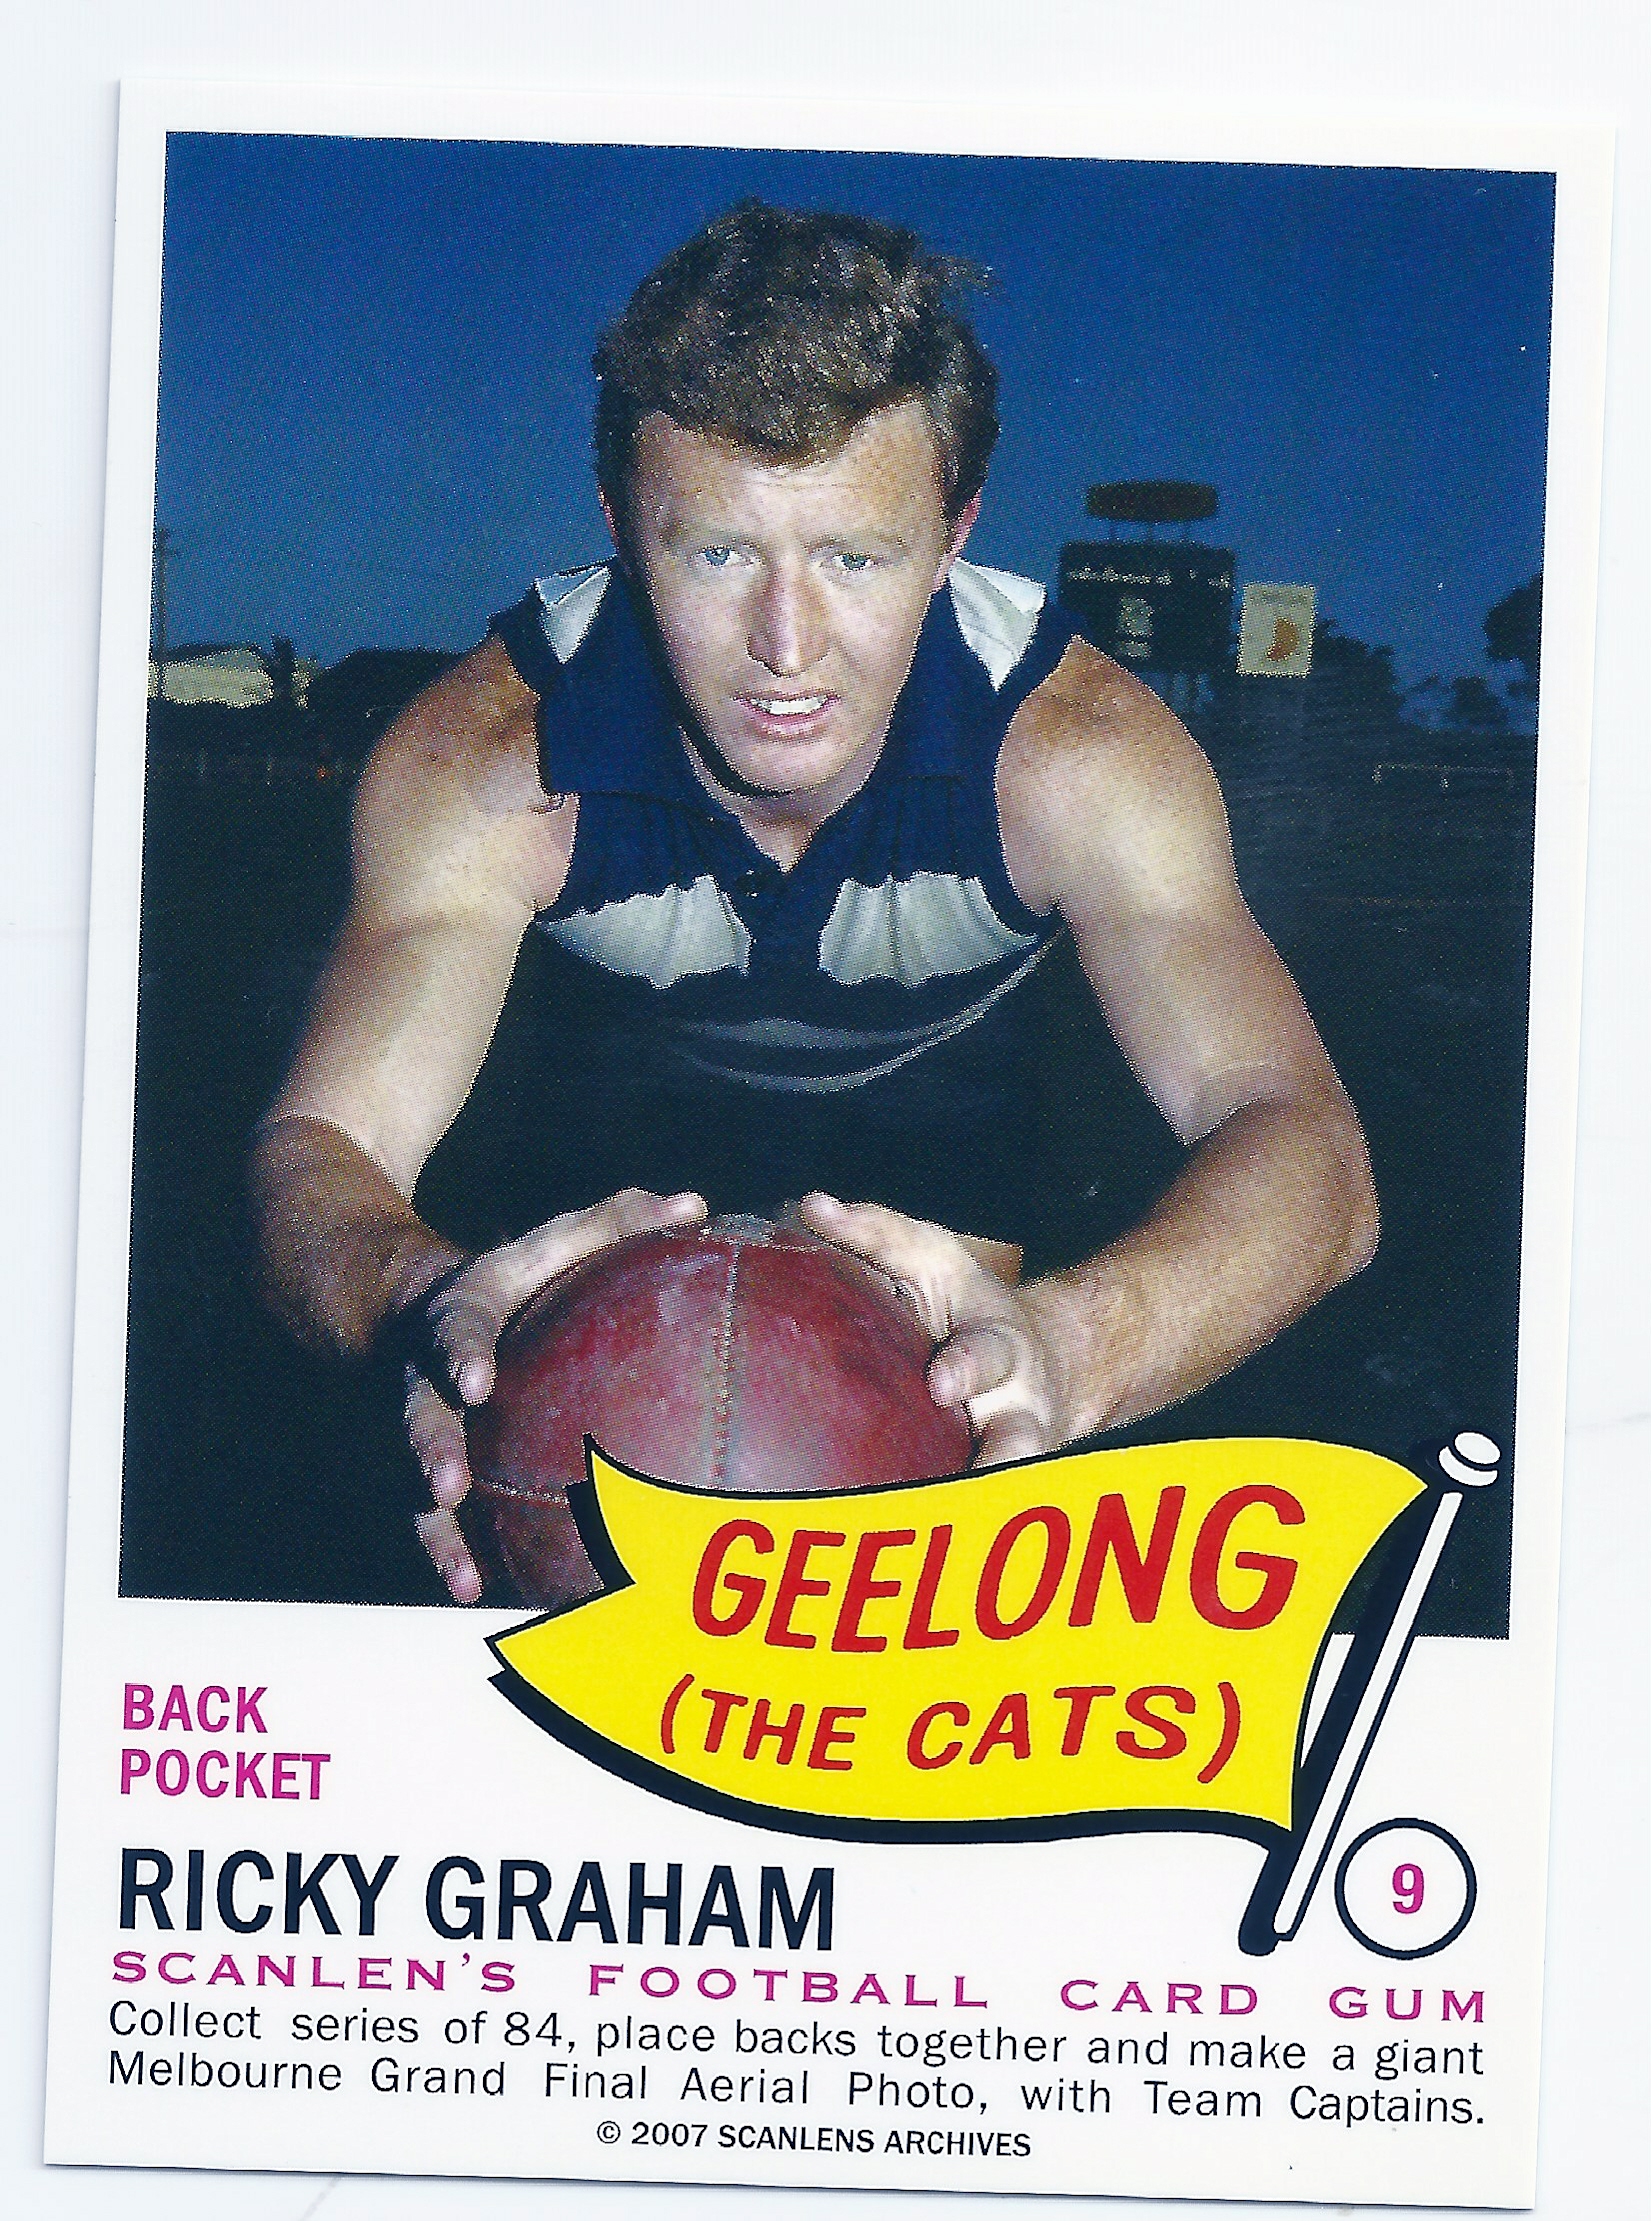 2007 – 1966 Scanlens Flag Archives (9) Ricky Graham Geelong